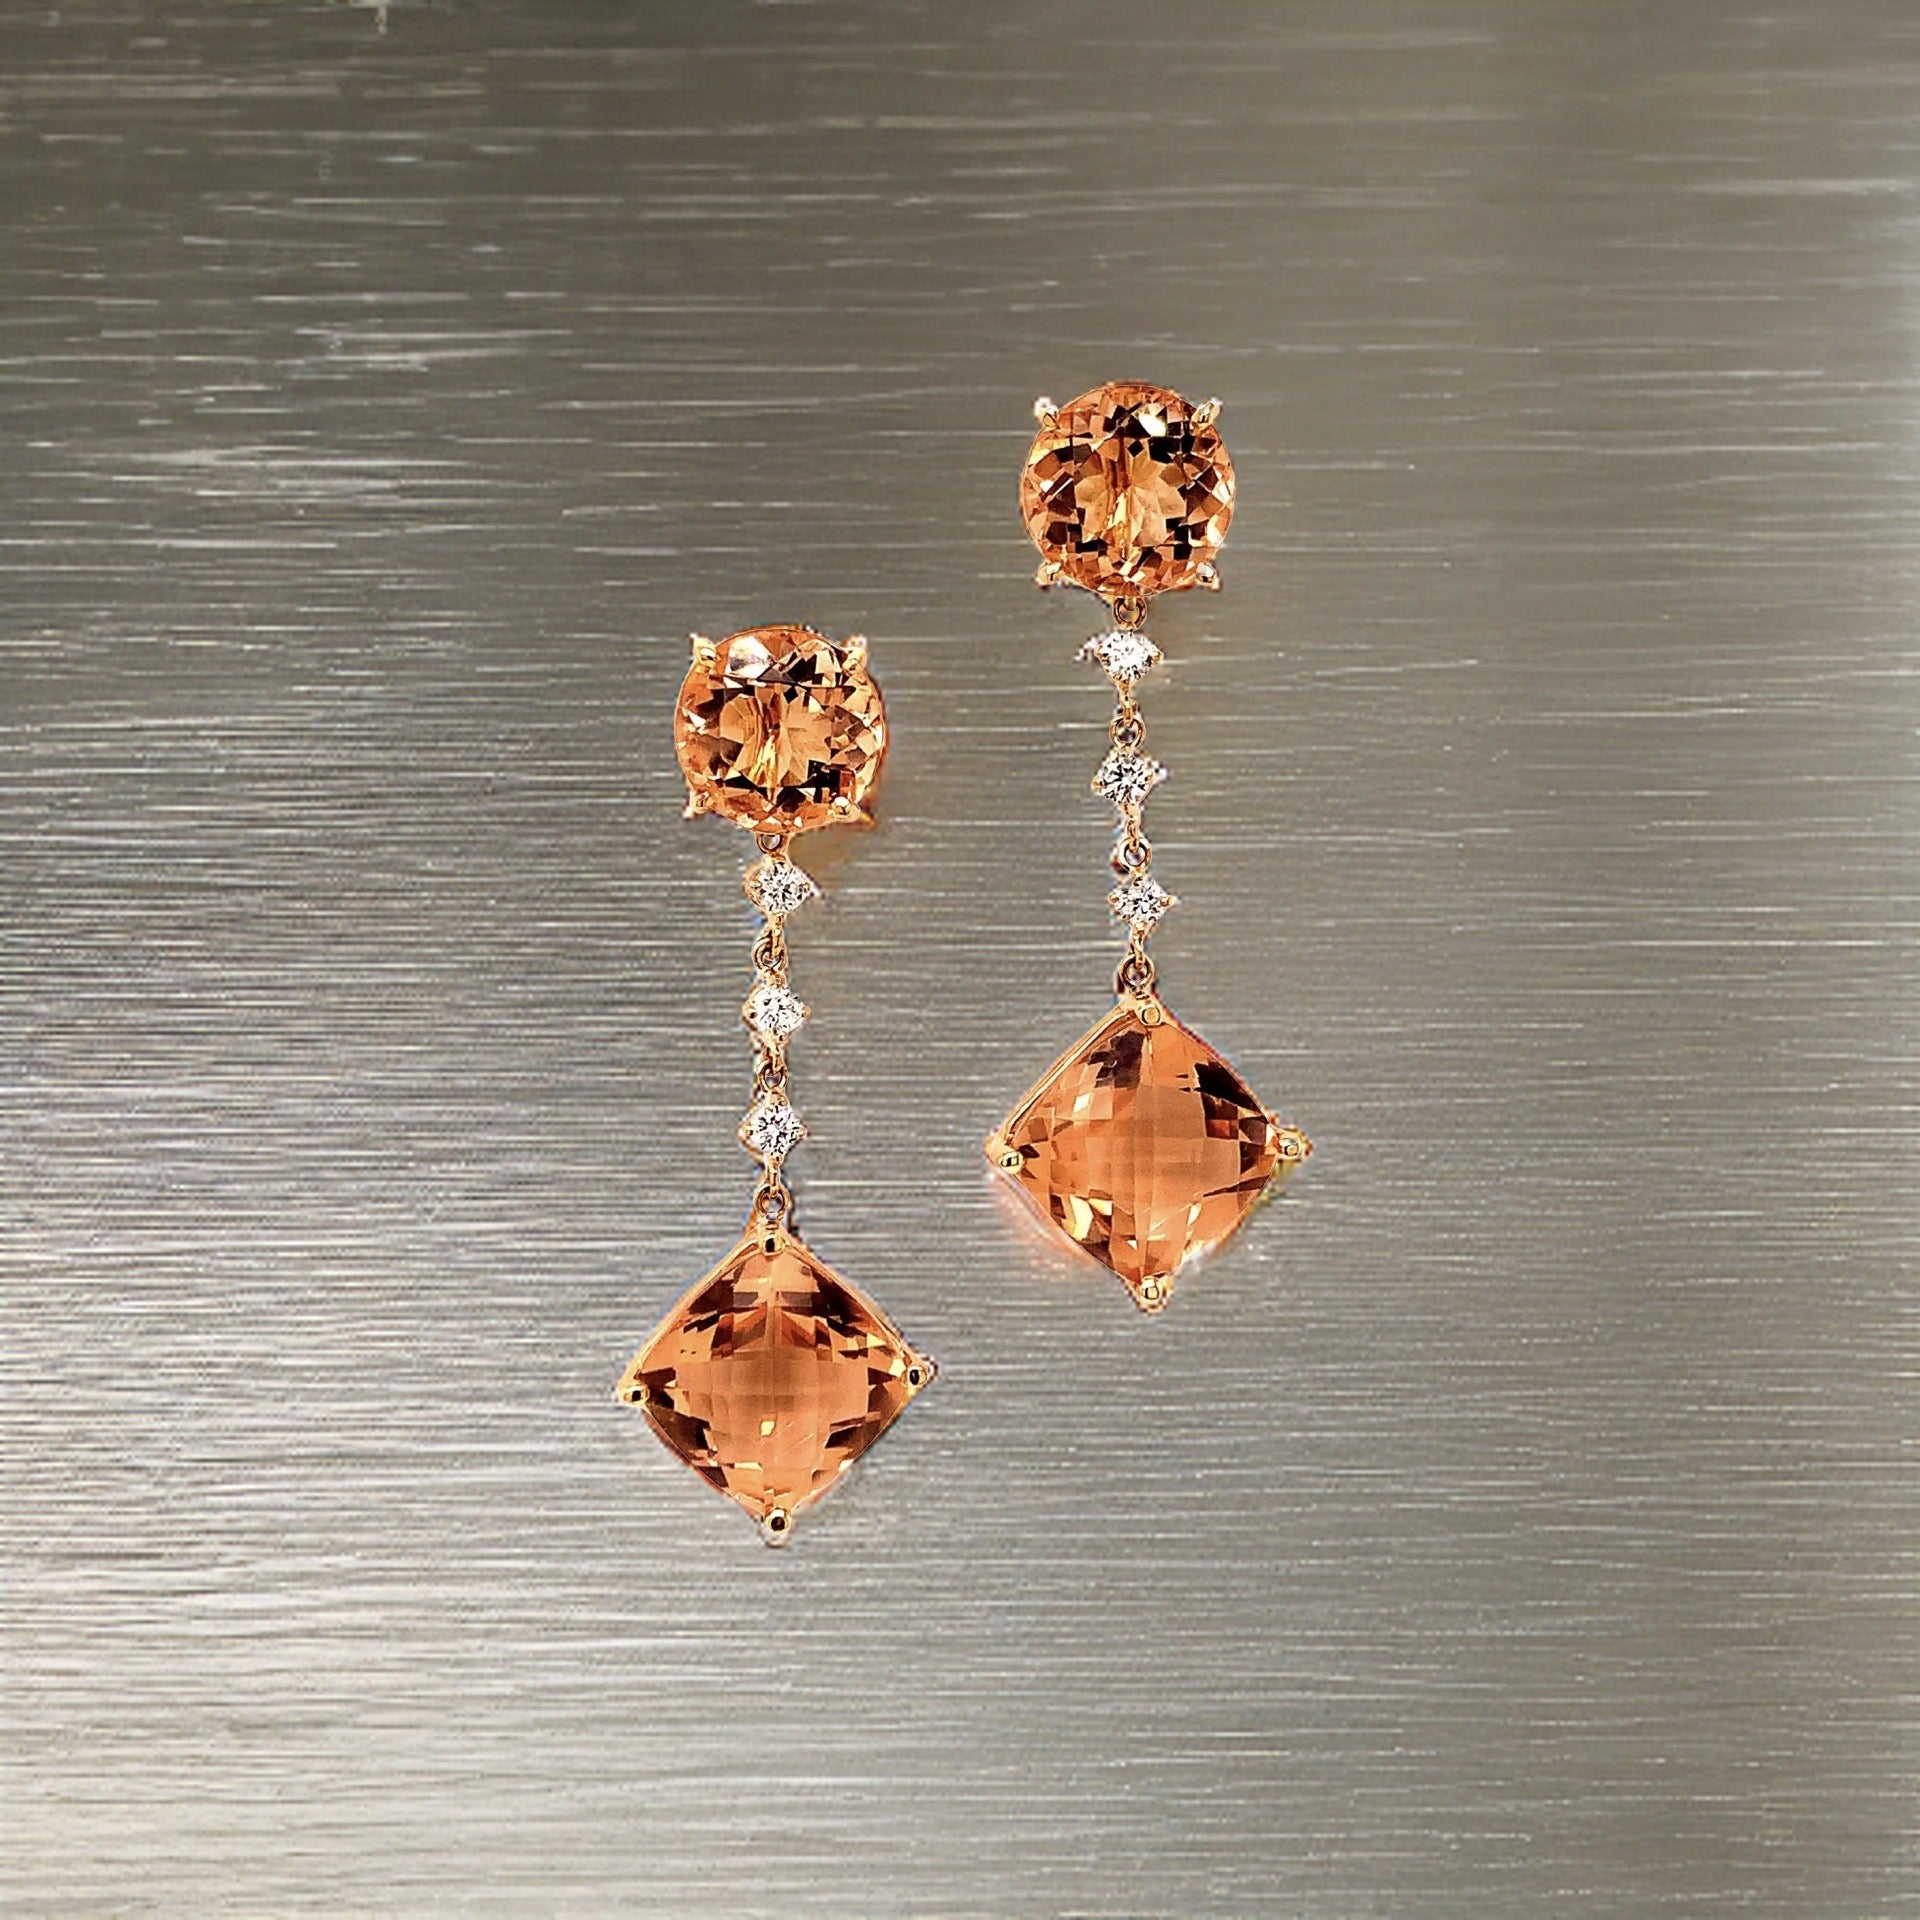 Natural Morganite Diamond Earrings 14k Gold 10.1 TCW Certified $5,950 111536 - Certified Fine Jewelry